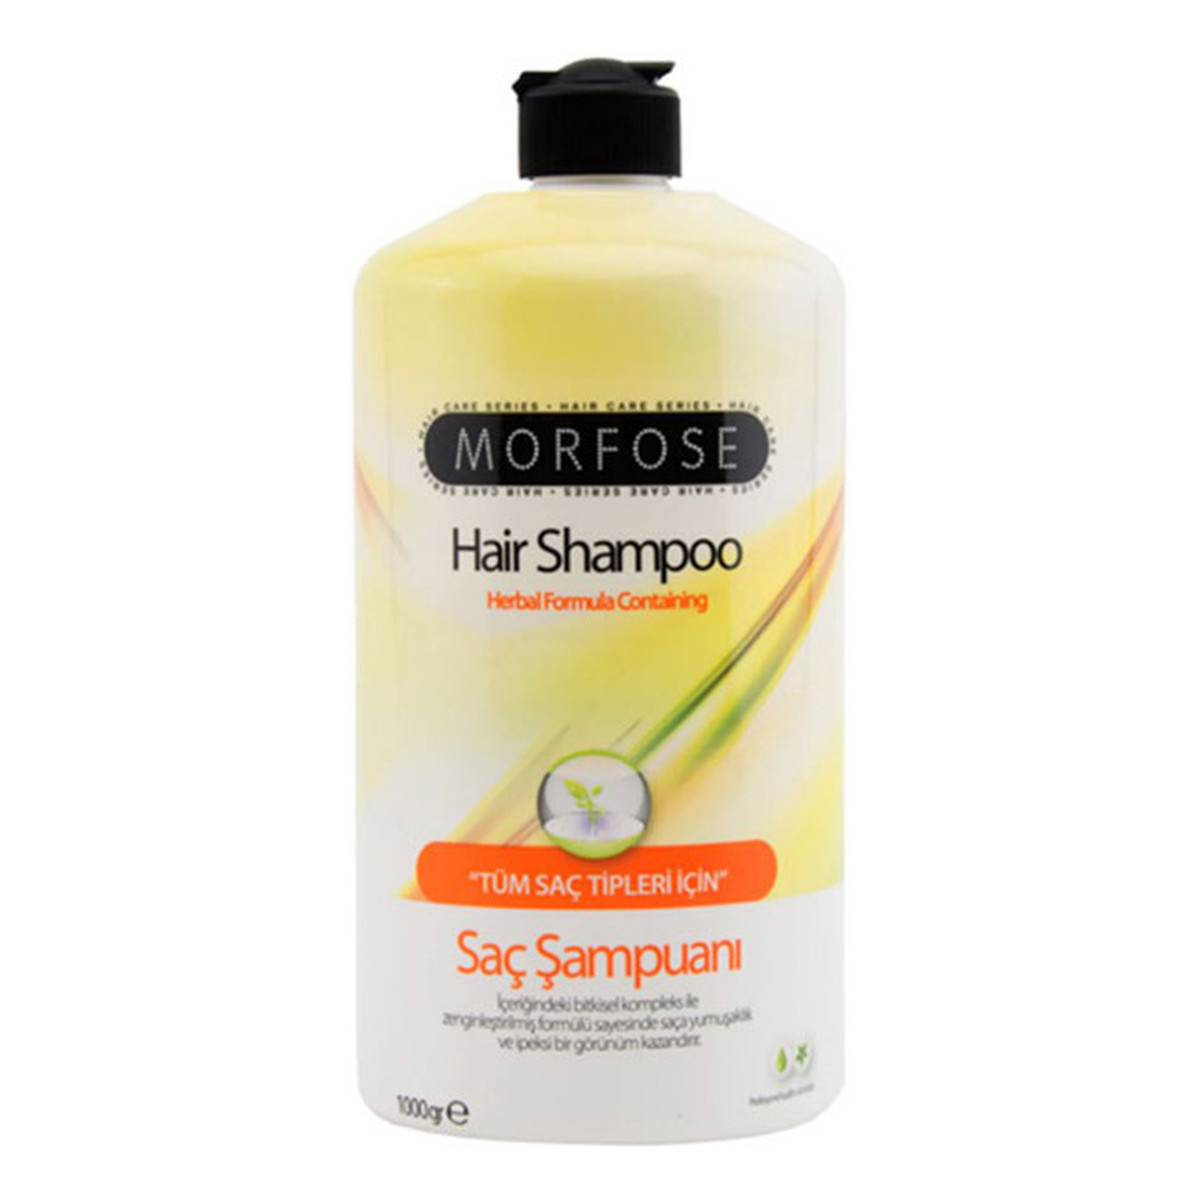 szampon morfose bez soli